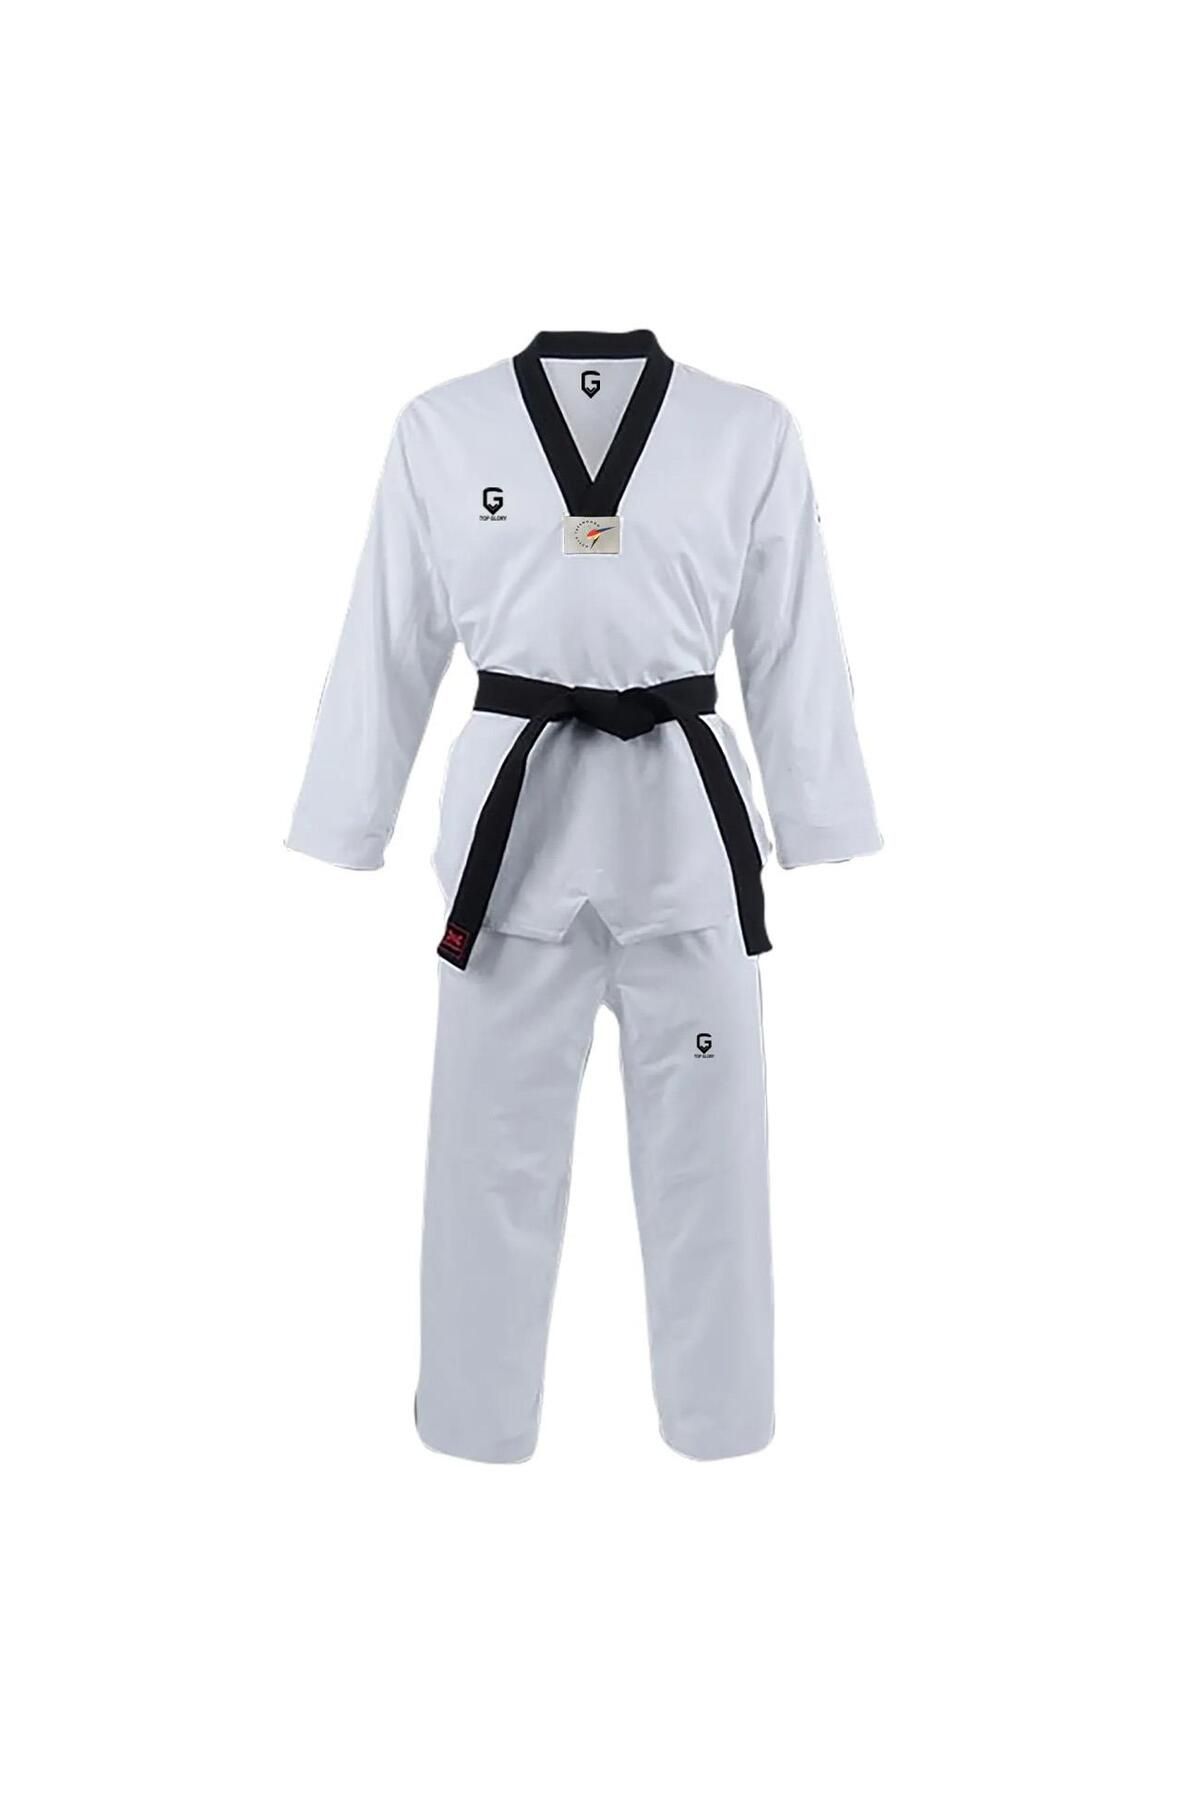 TOP GLORY 574610500 Siyah Yaka Taekwondo Elbisesi Beyaz-siyah